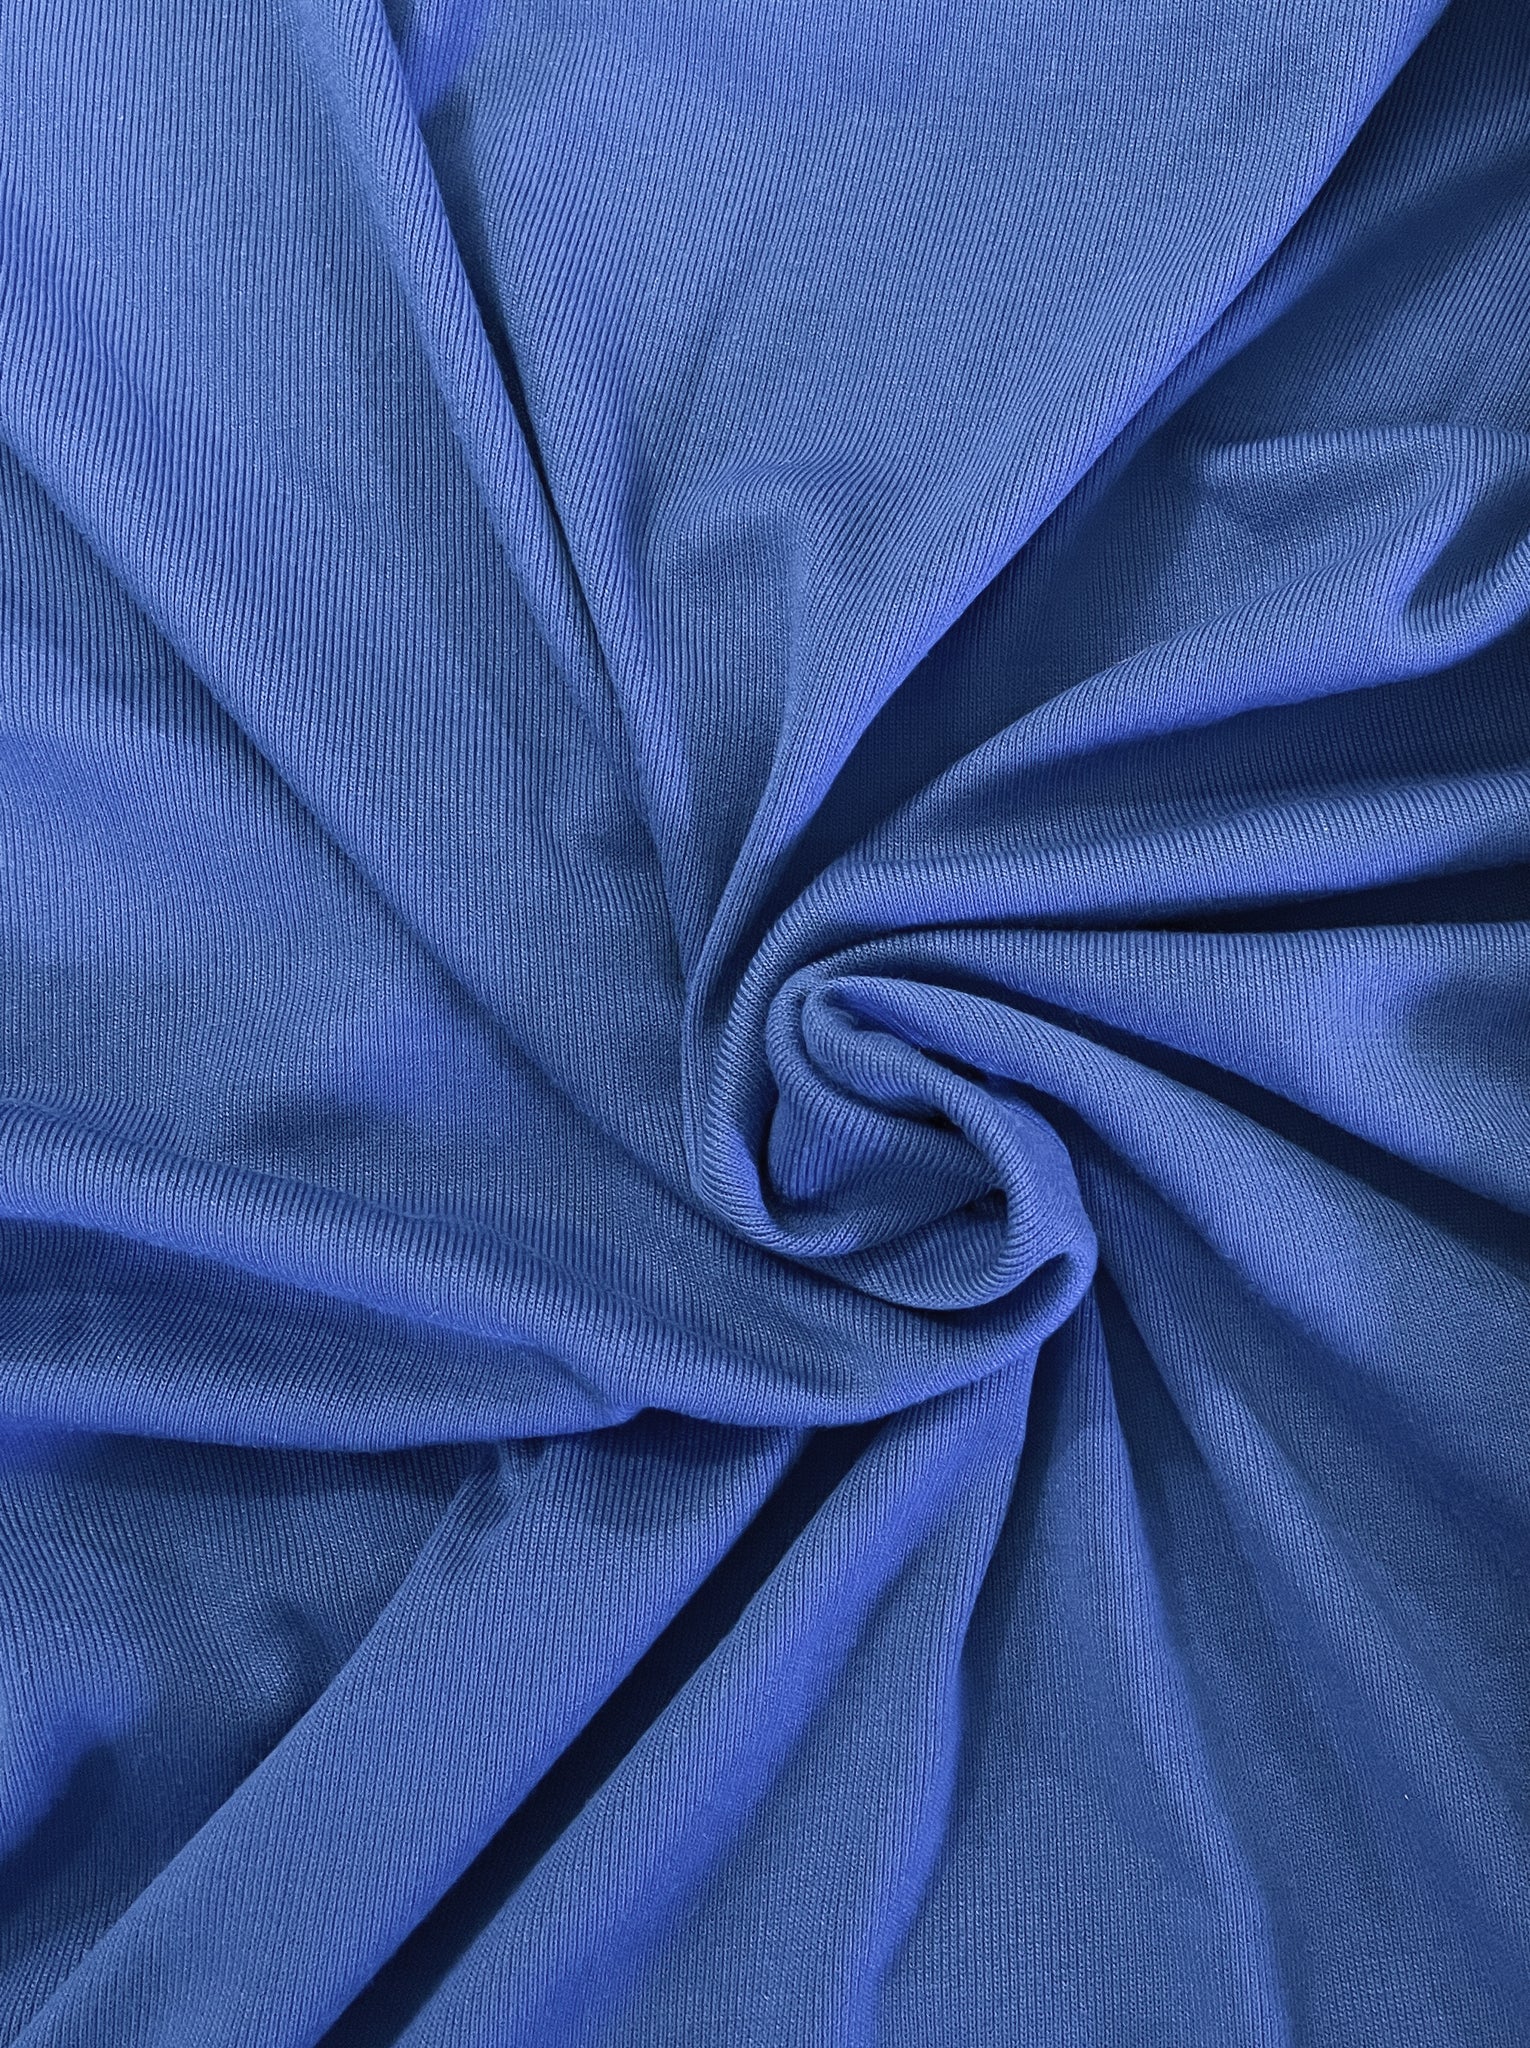 3 1/4 YD Polyester Blend Knit - Royal Blue